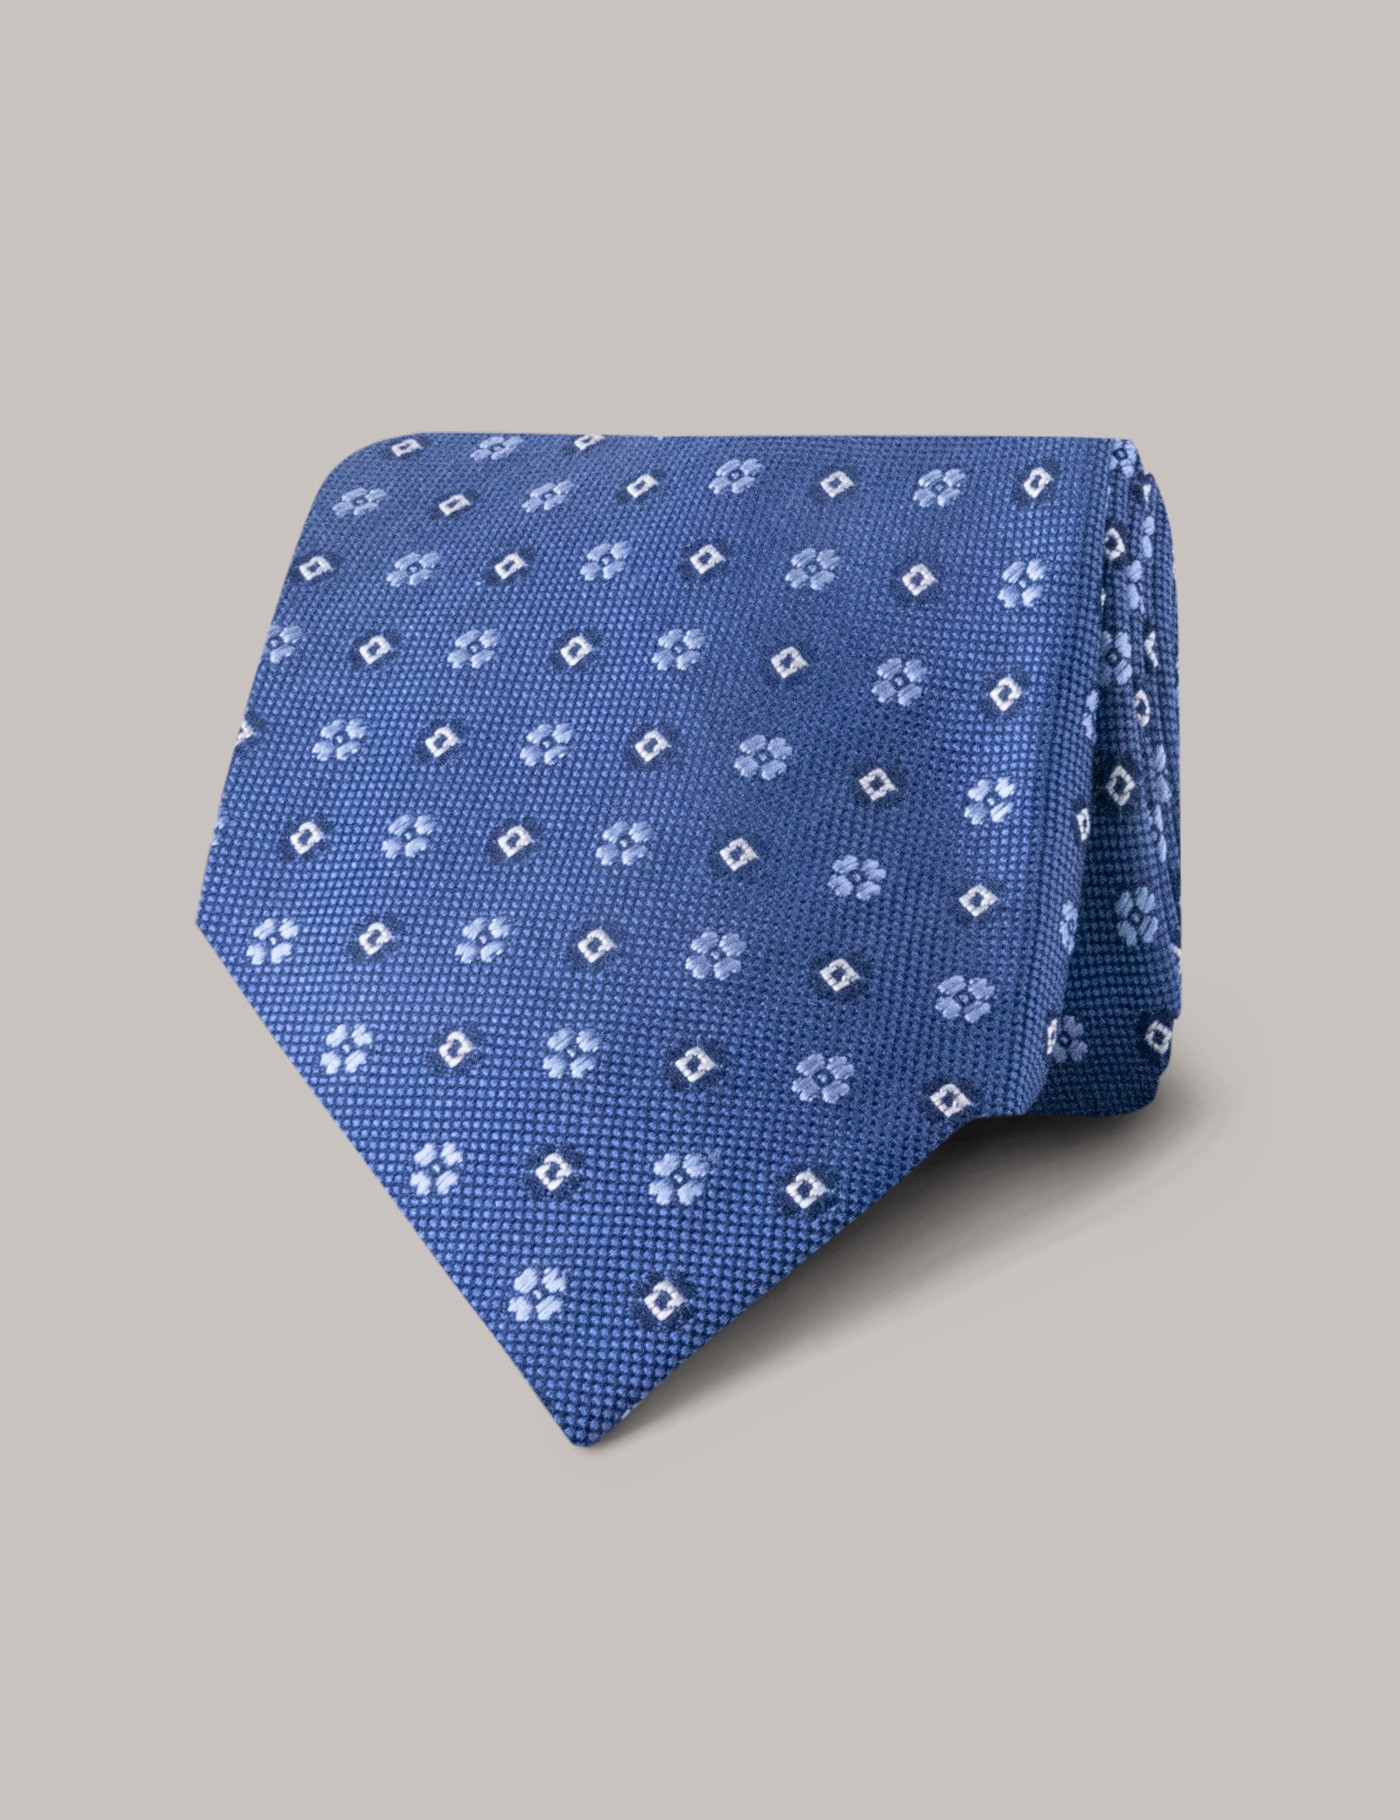 hawes & curtis blue & light blue floral squares tie - 100% silk